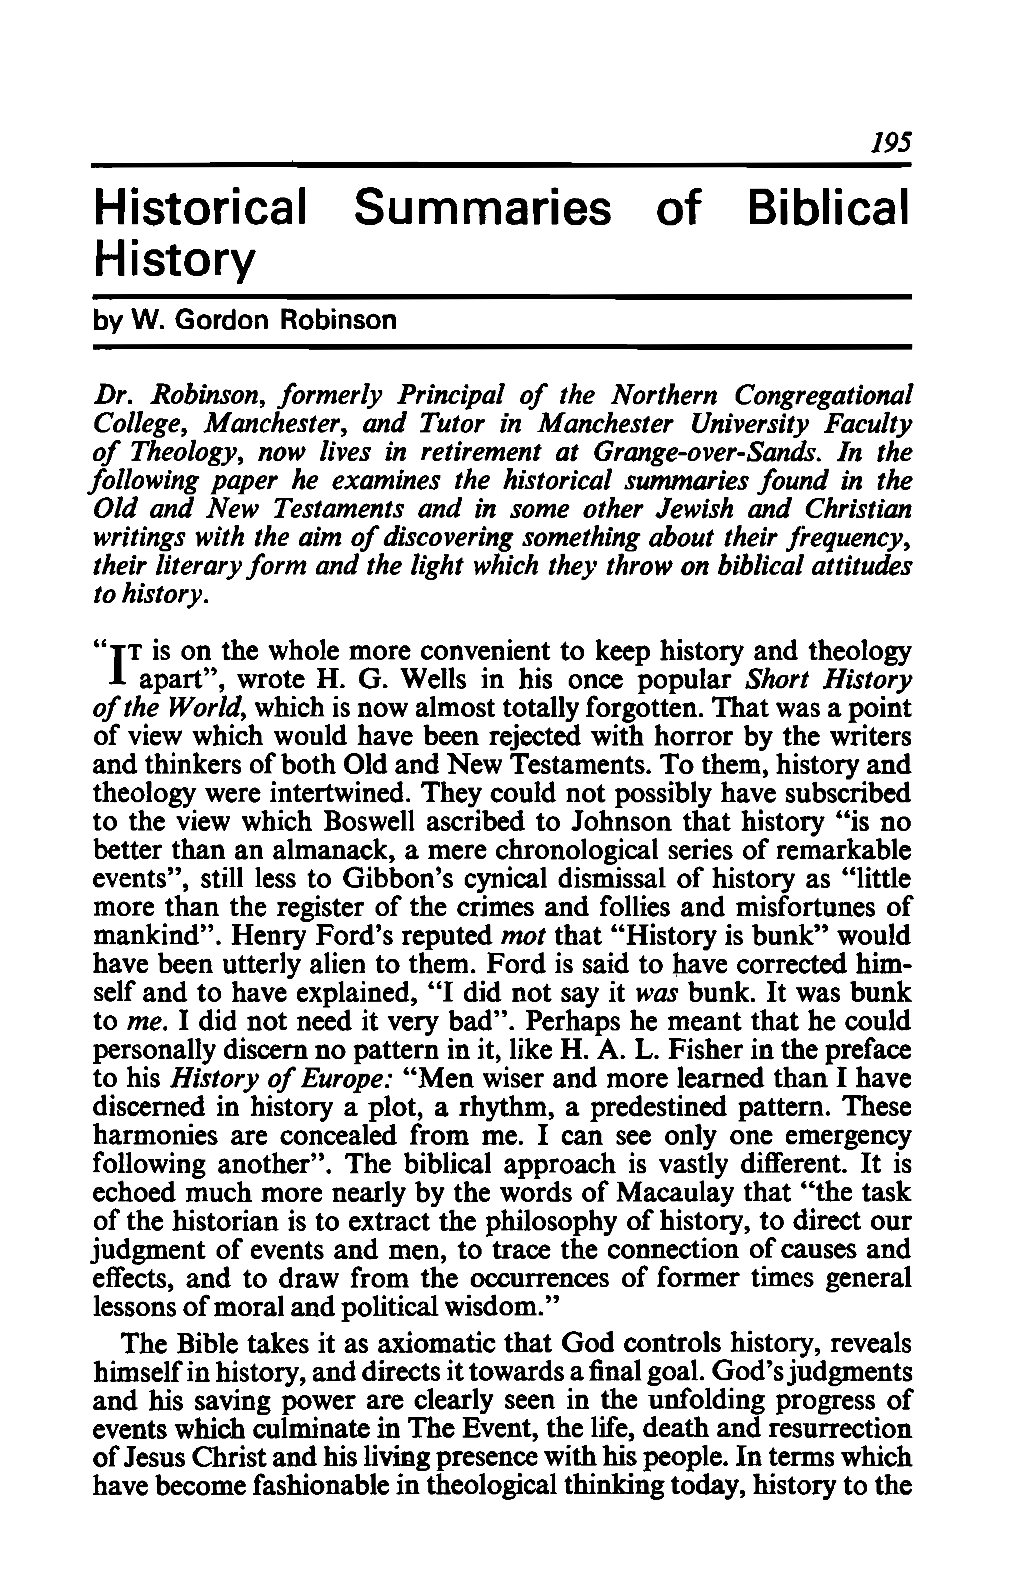 W. Gordon Robinson, "Historical Summaries of Biblical Research,"